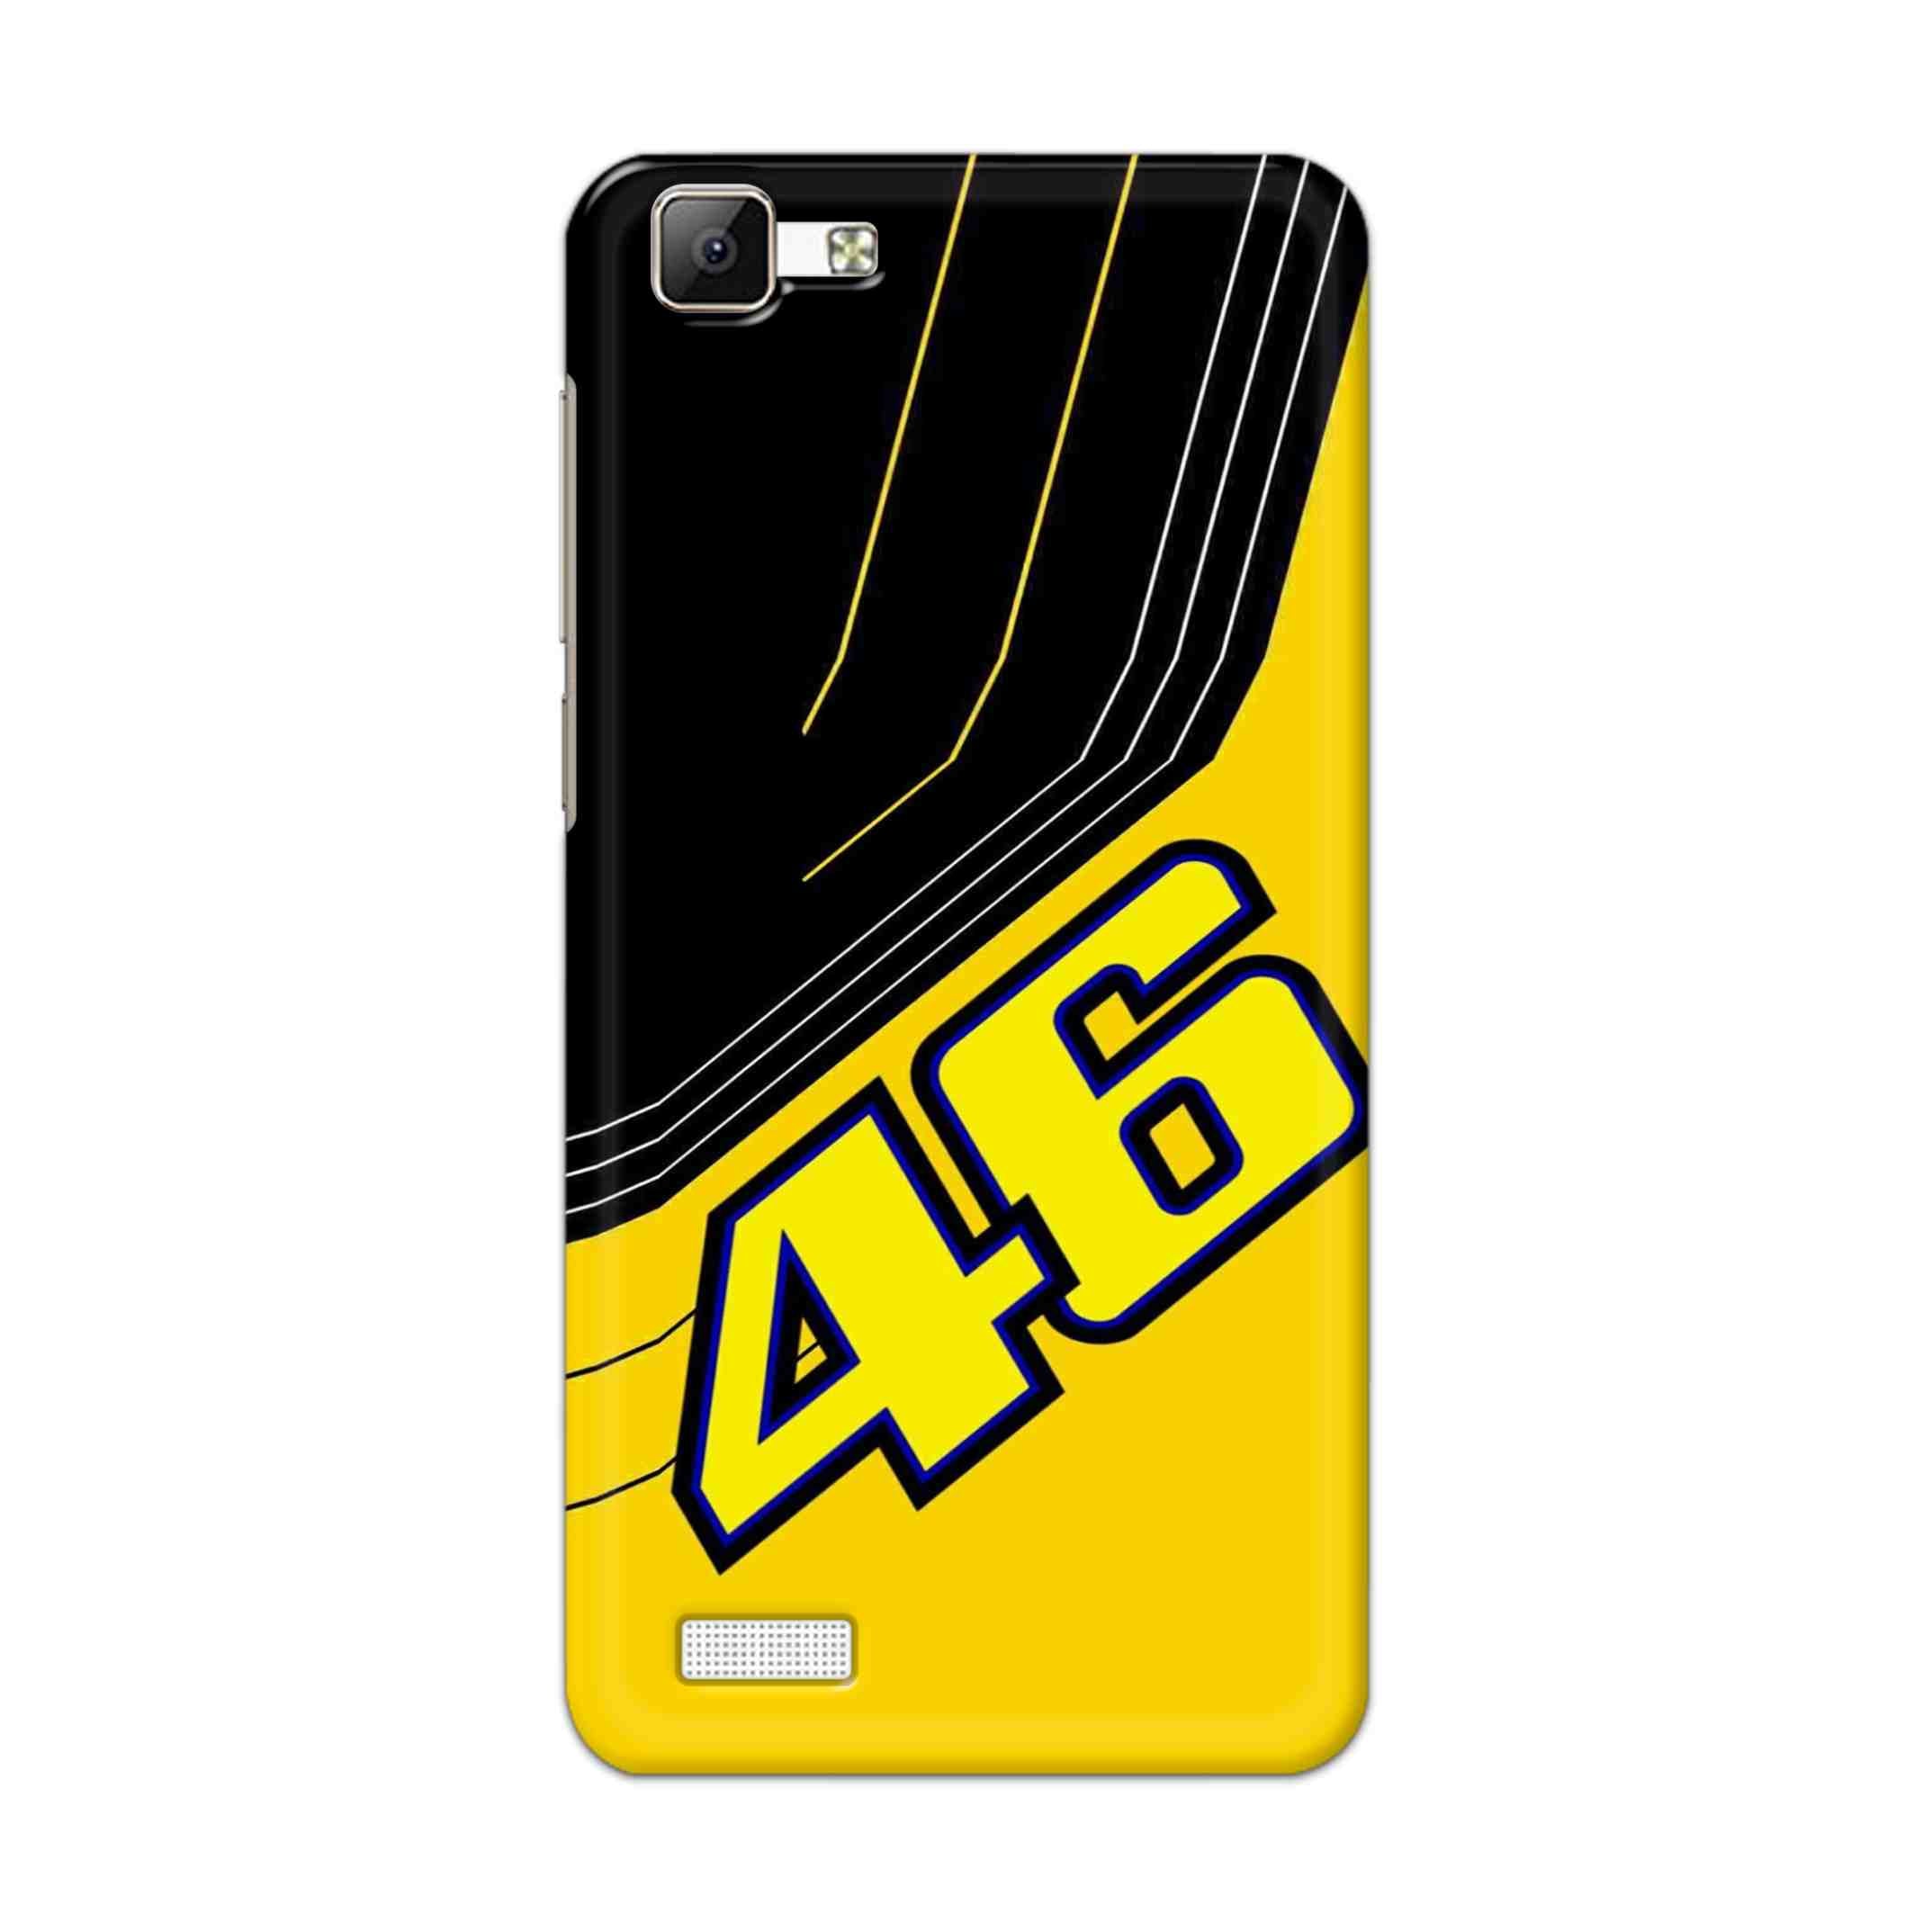 Buy 46 Hard Back Mobile Phone Case Cover For Vivo Y35 Online